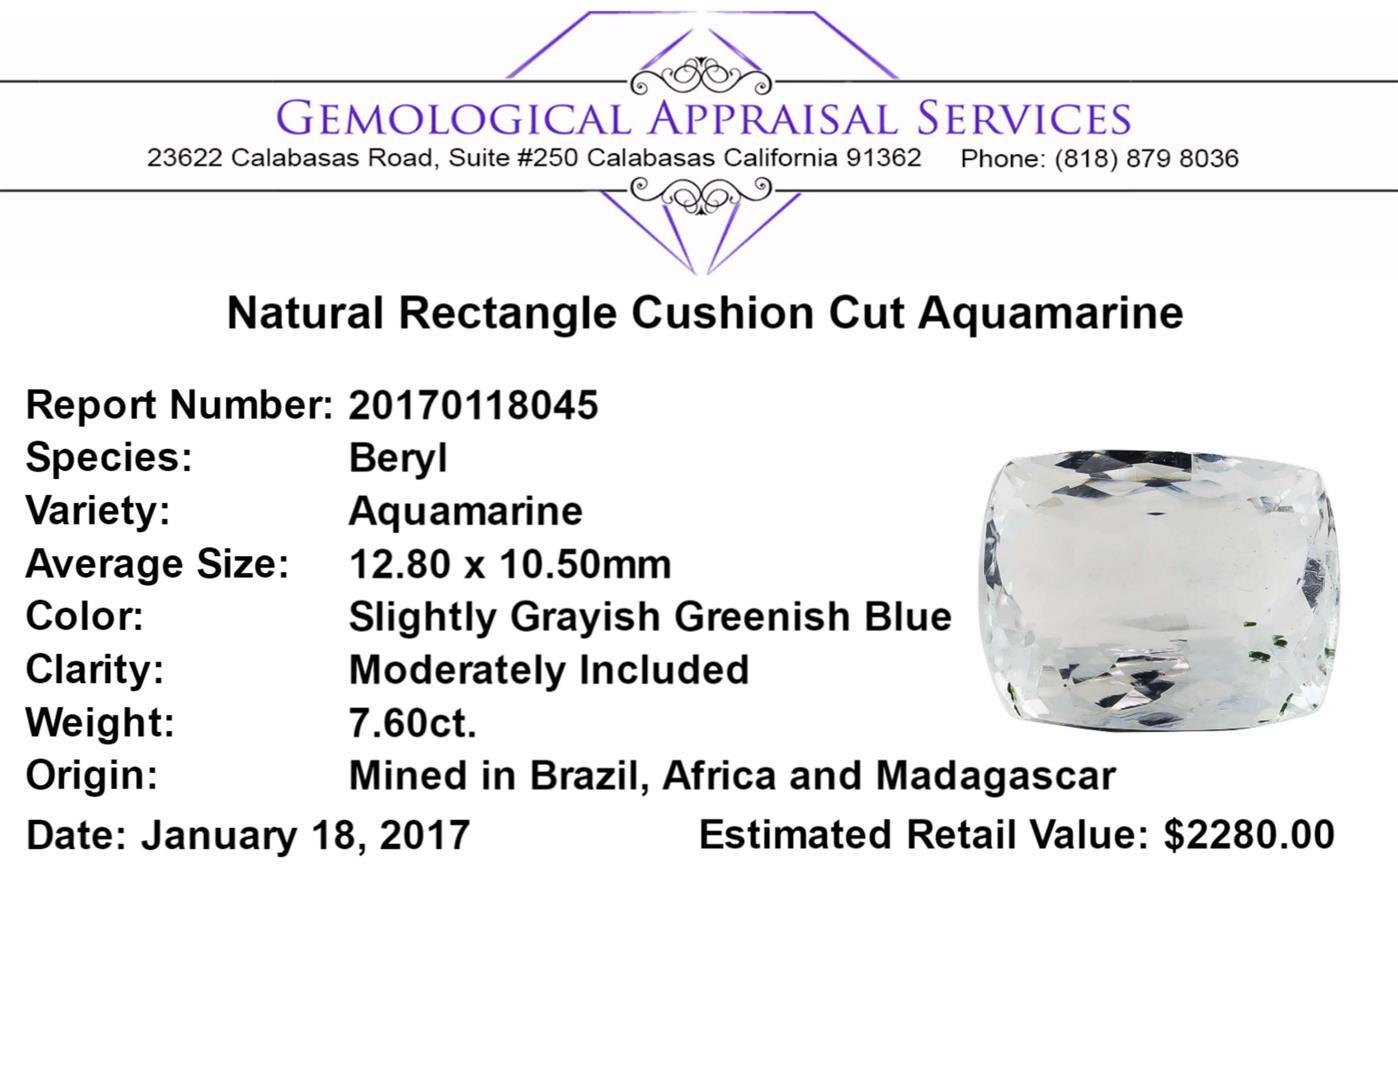 7.60 ct.Natural Rectangle Cushion Cut Aquamarine